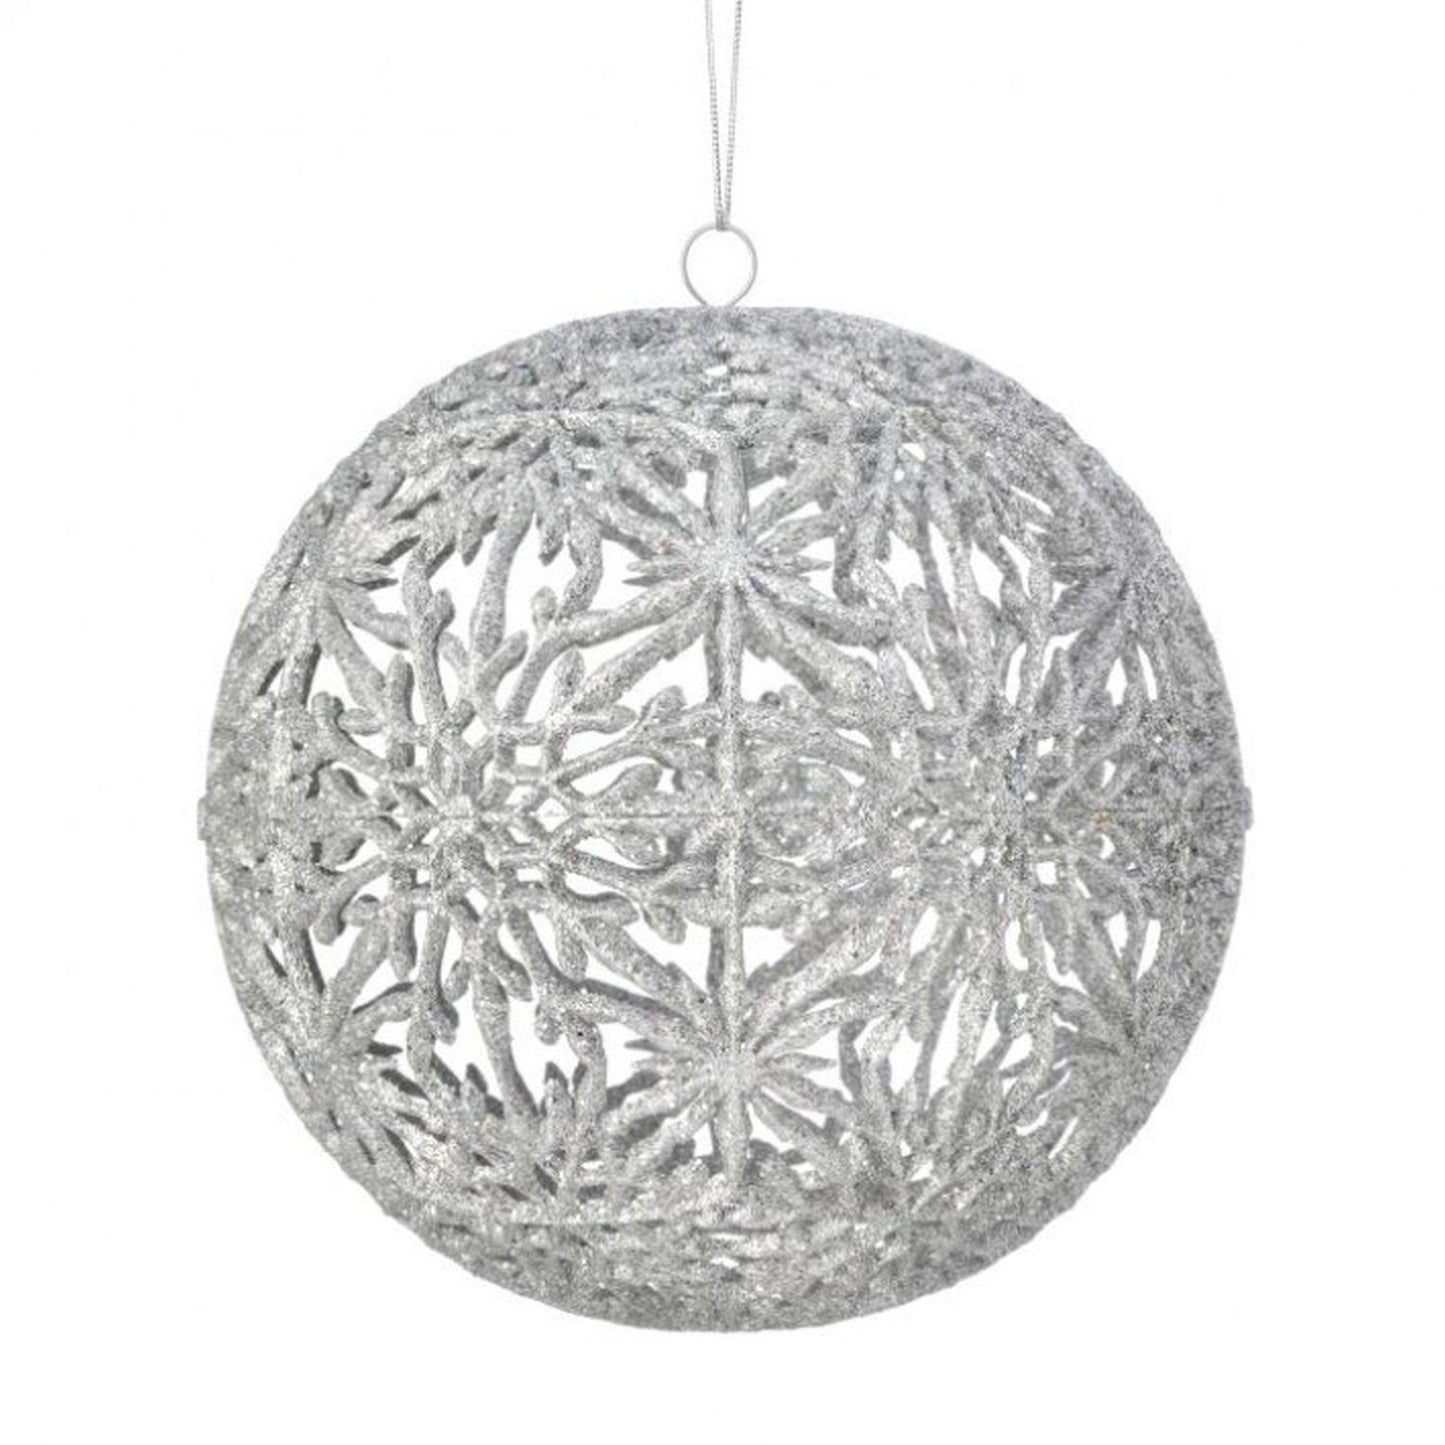 Regency International Snowflake Hollow Ball Ornament